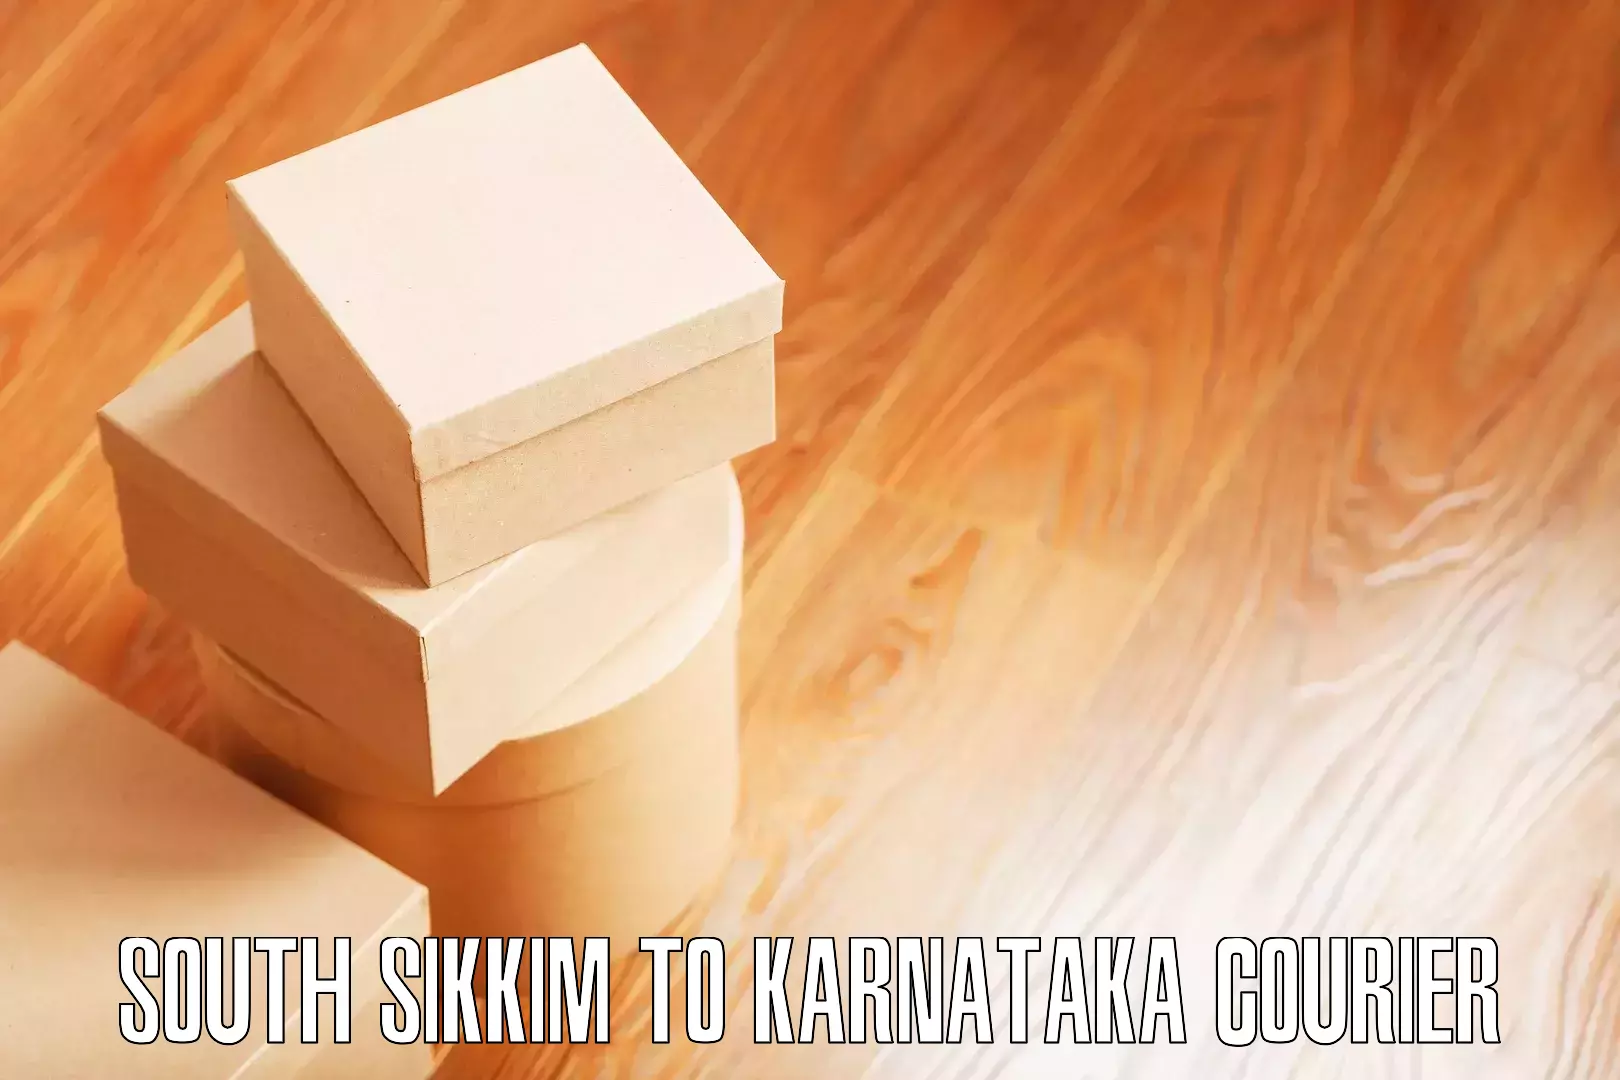 Home goods moving company South Sikkim to Karnataka